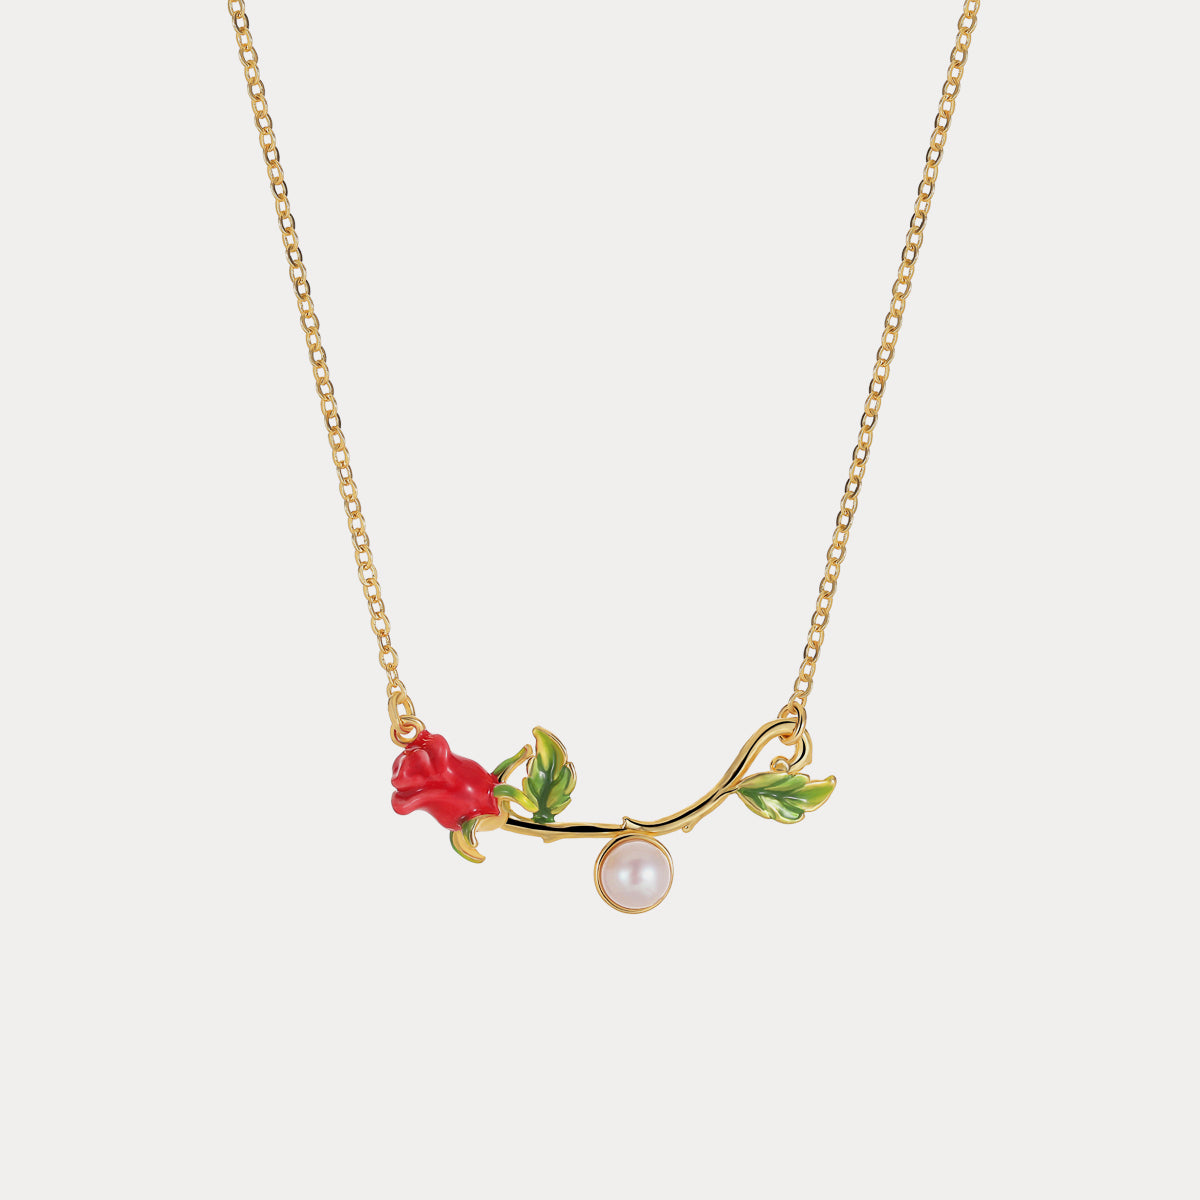 Selenichast rose necklace